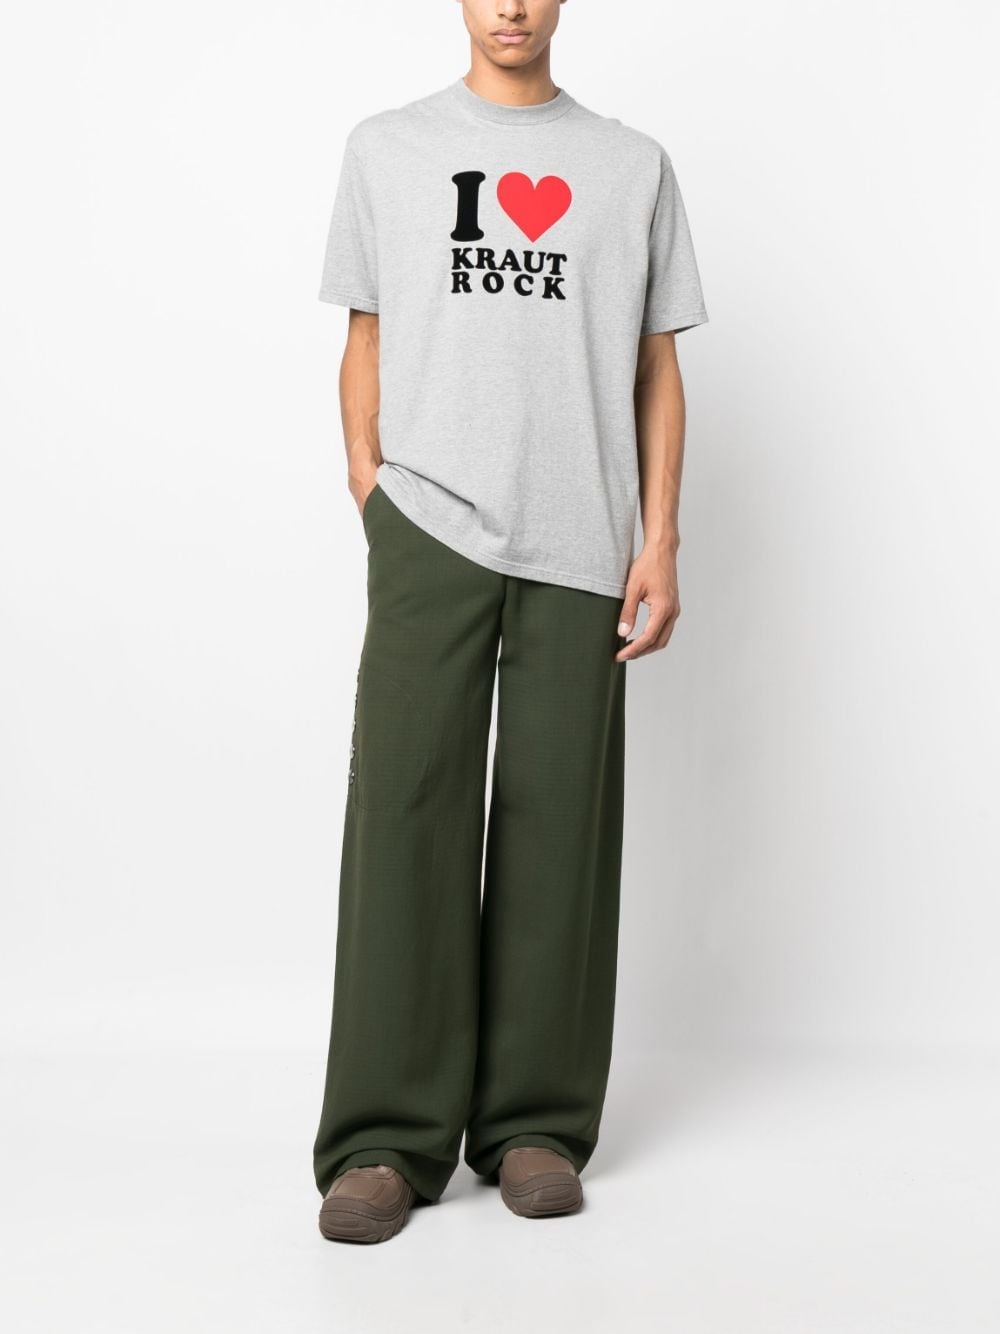 UNDERCOVER slogan-print cotton T-shirt | REVERSIBLE